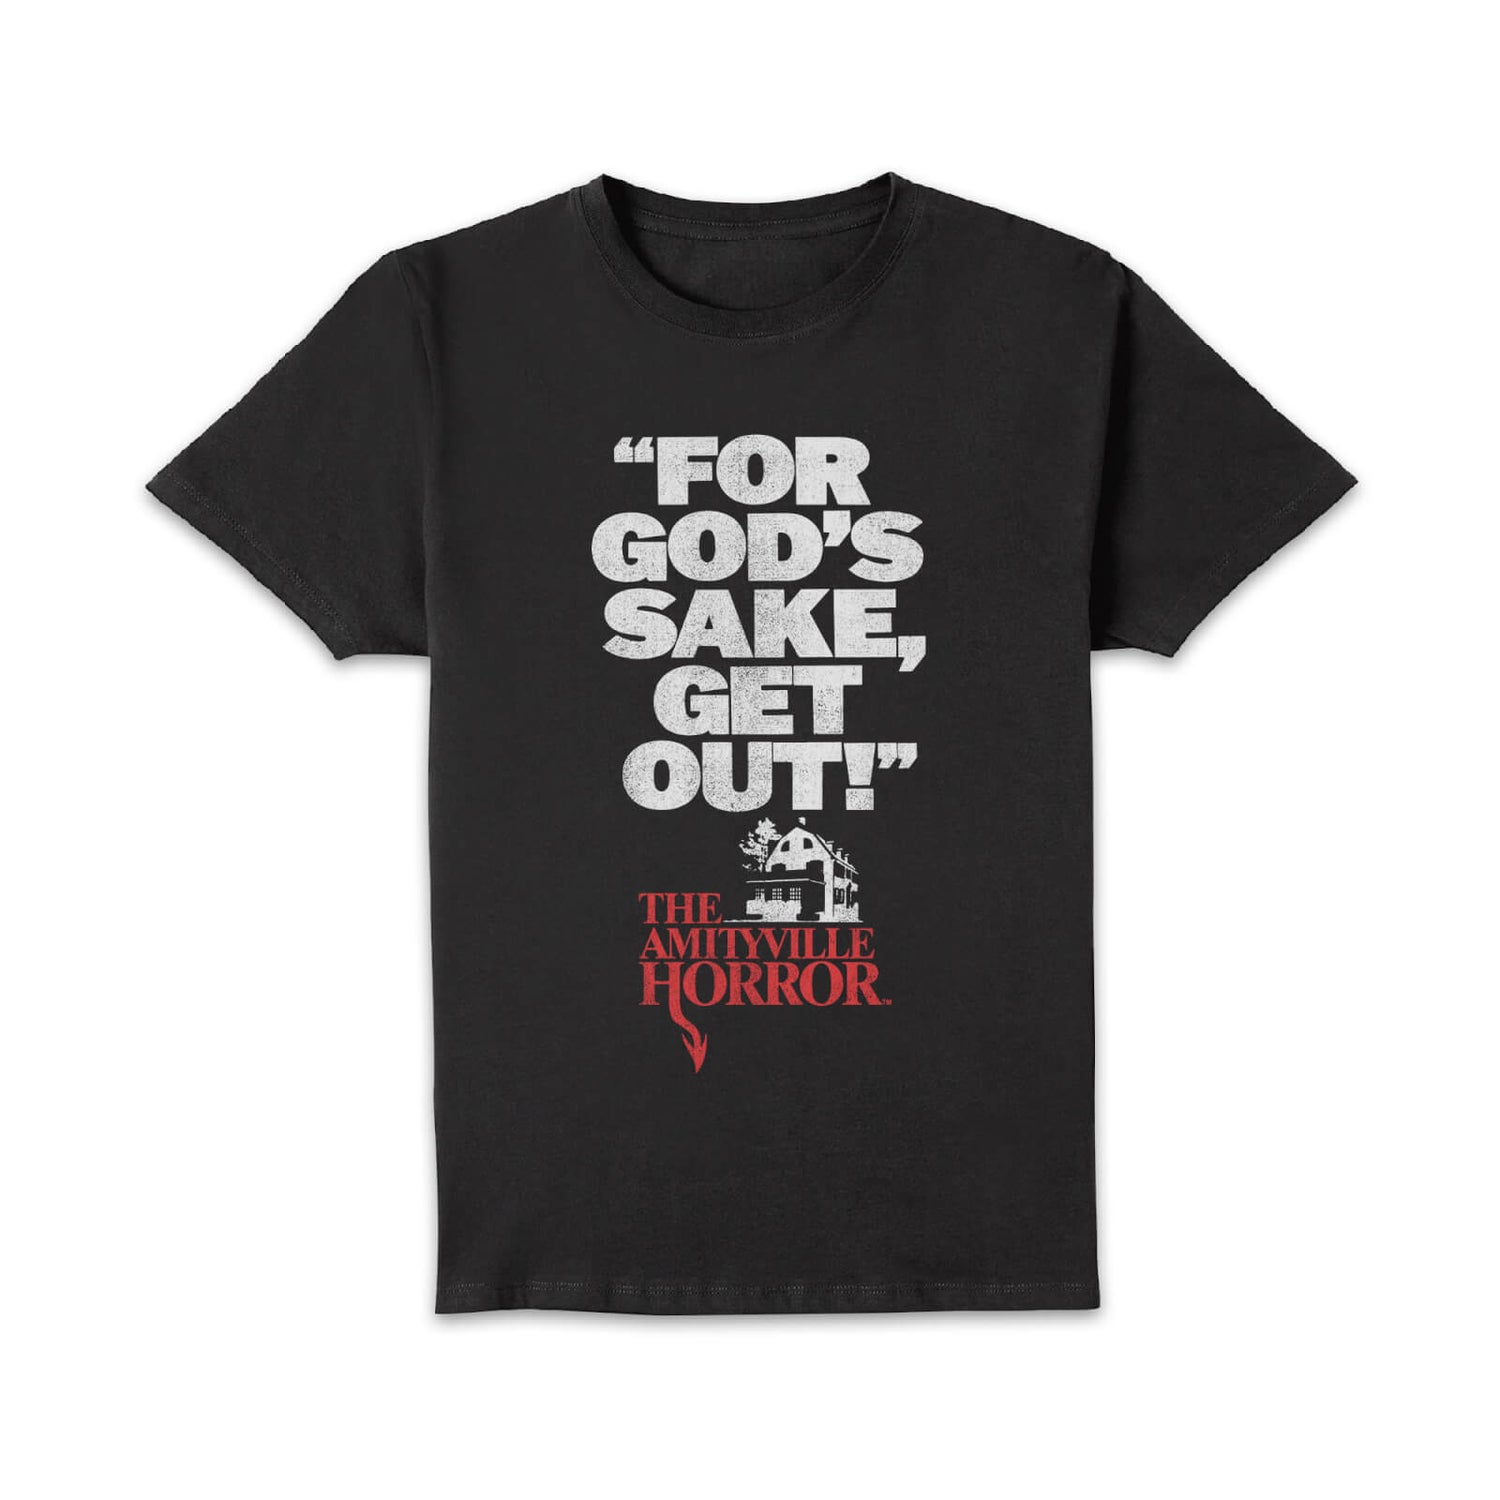 The Amityville Horror For God's Sake Get Out! Unisex T-Shirt - Black